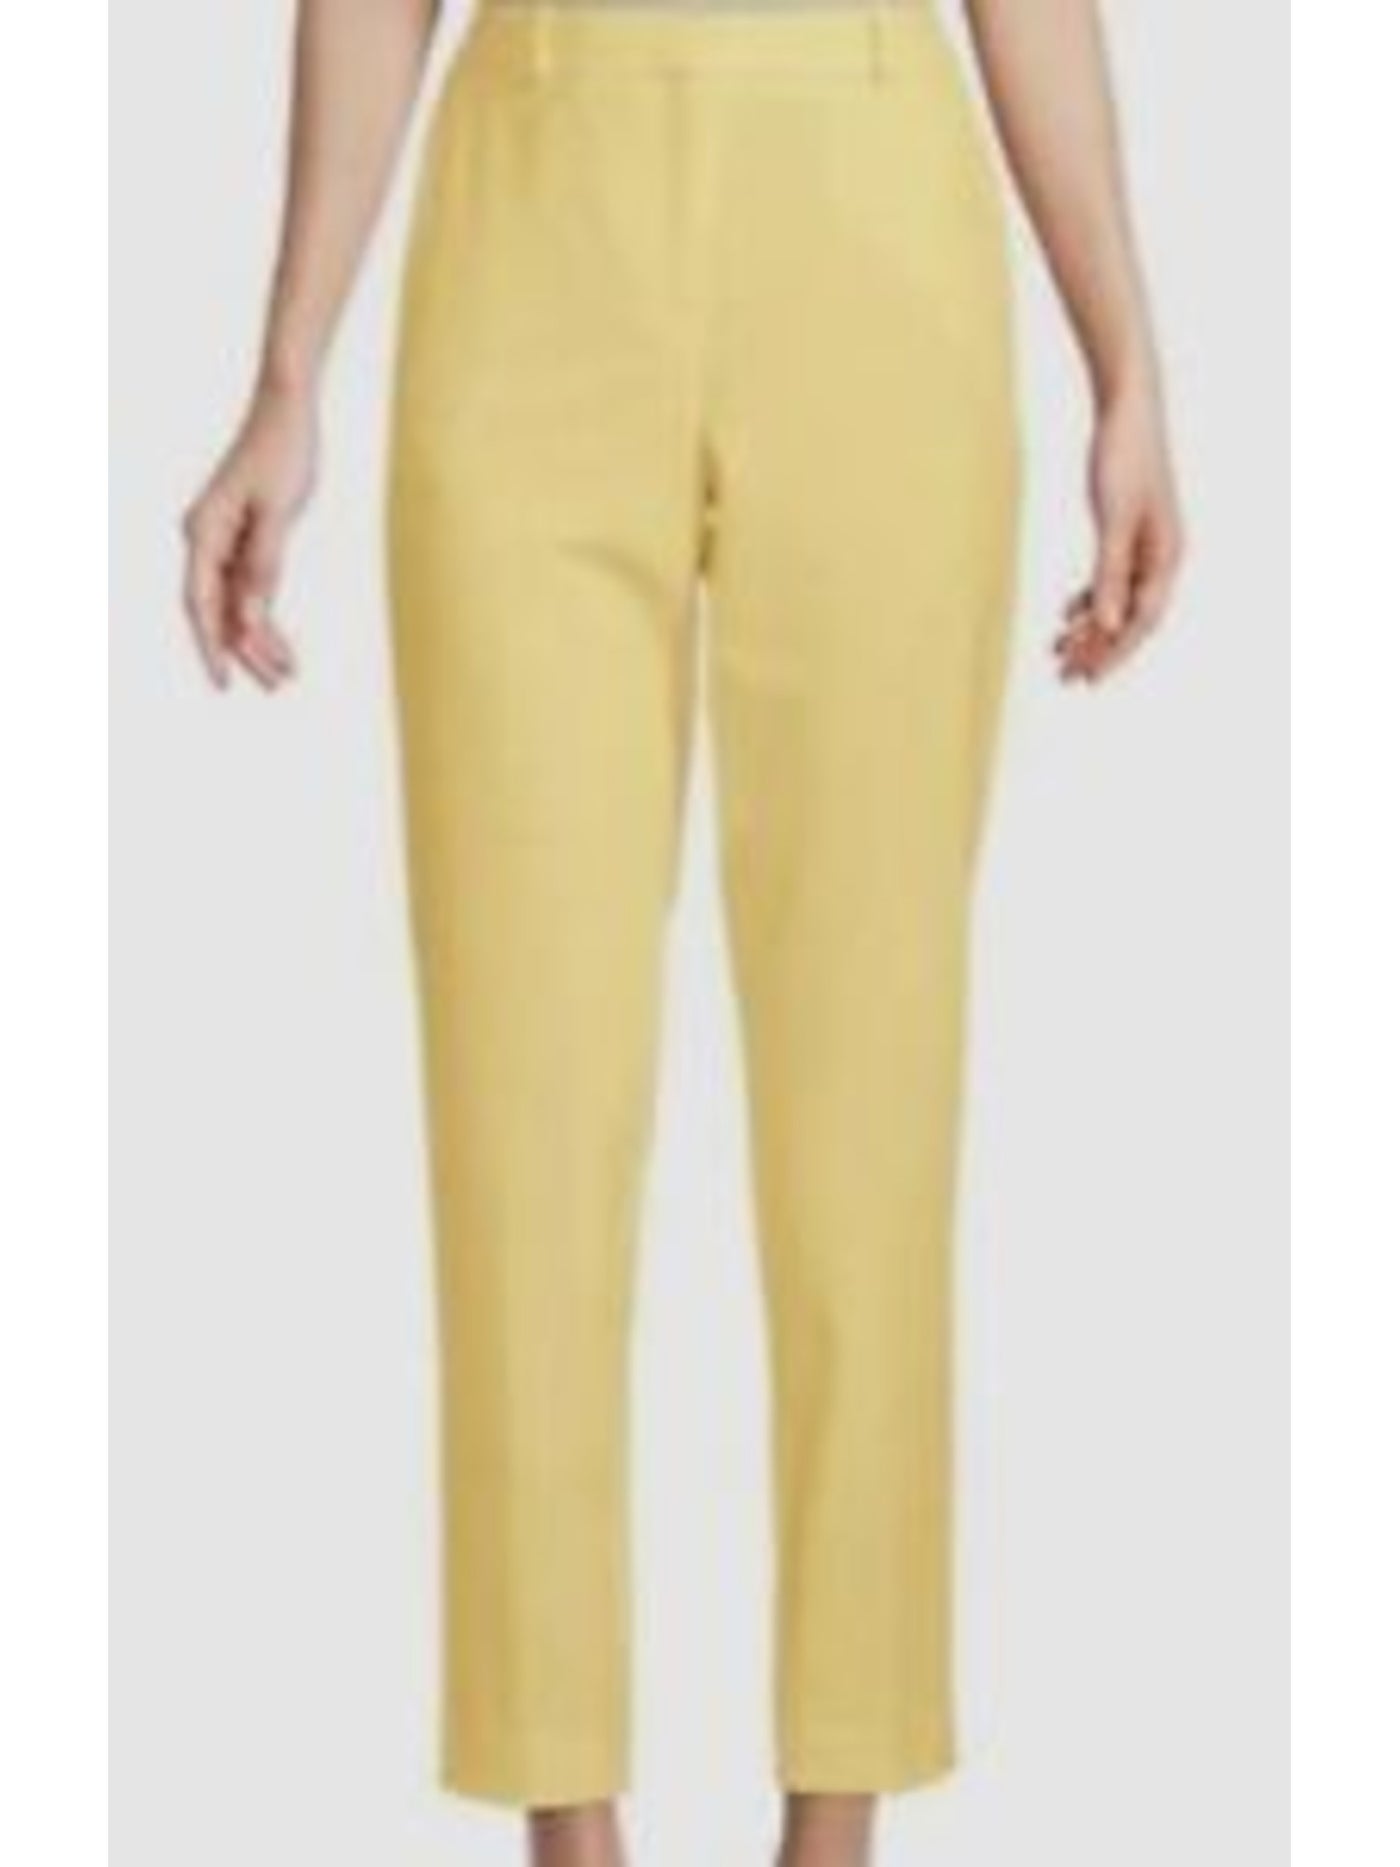 DKNY Womens Yellow Zippered Pocketed Straight leg Pants Petites 16P